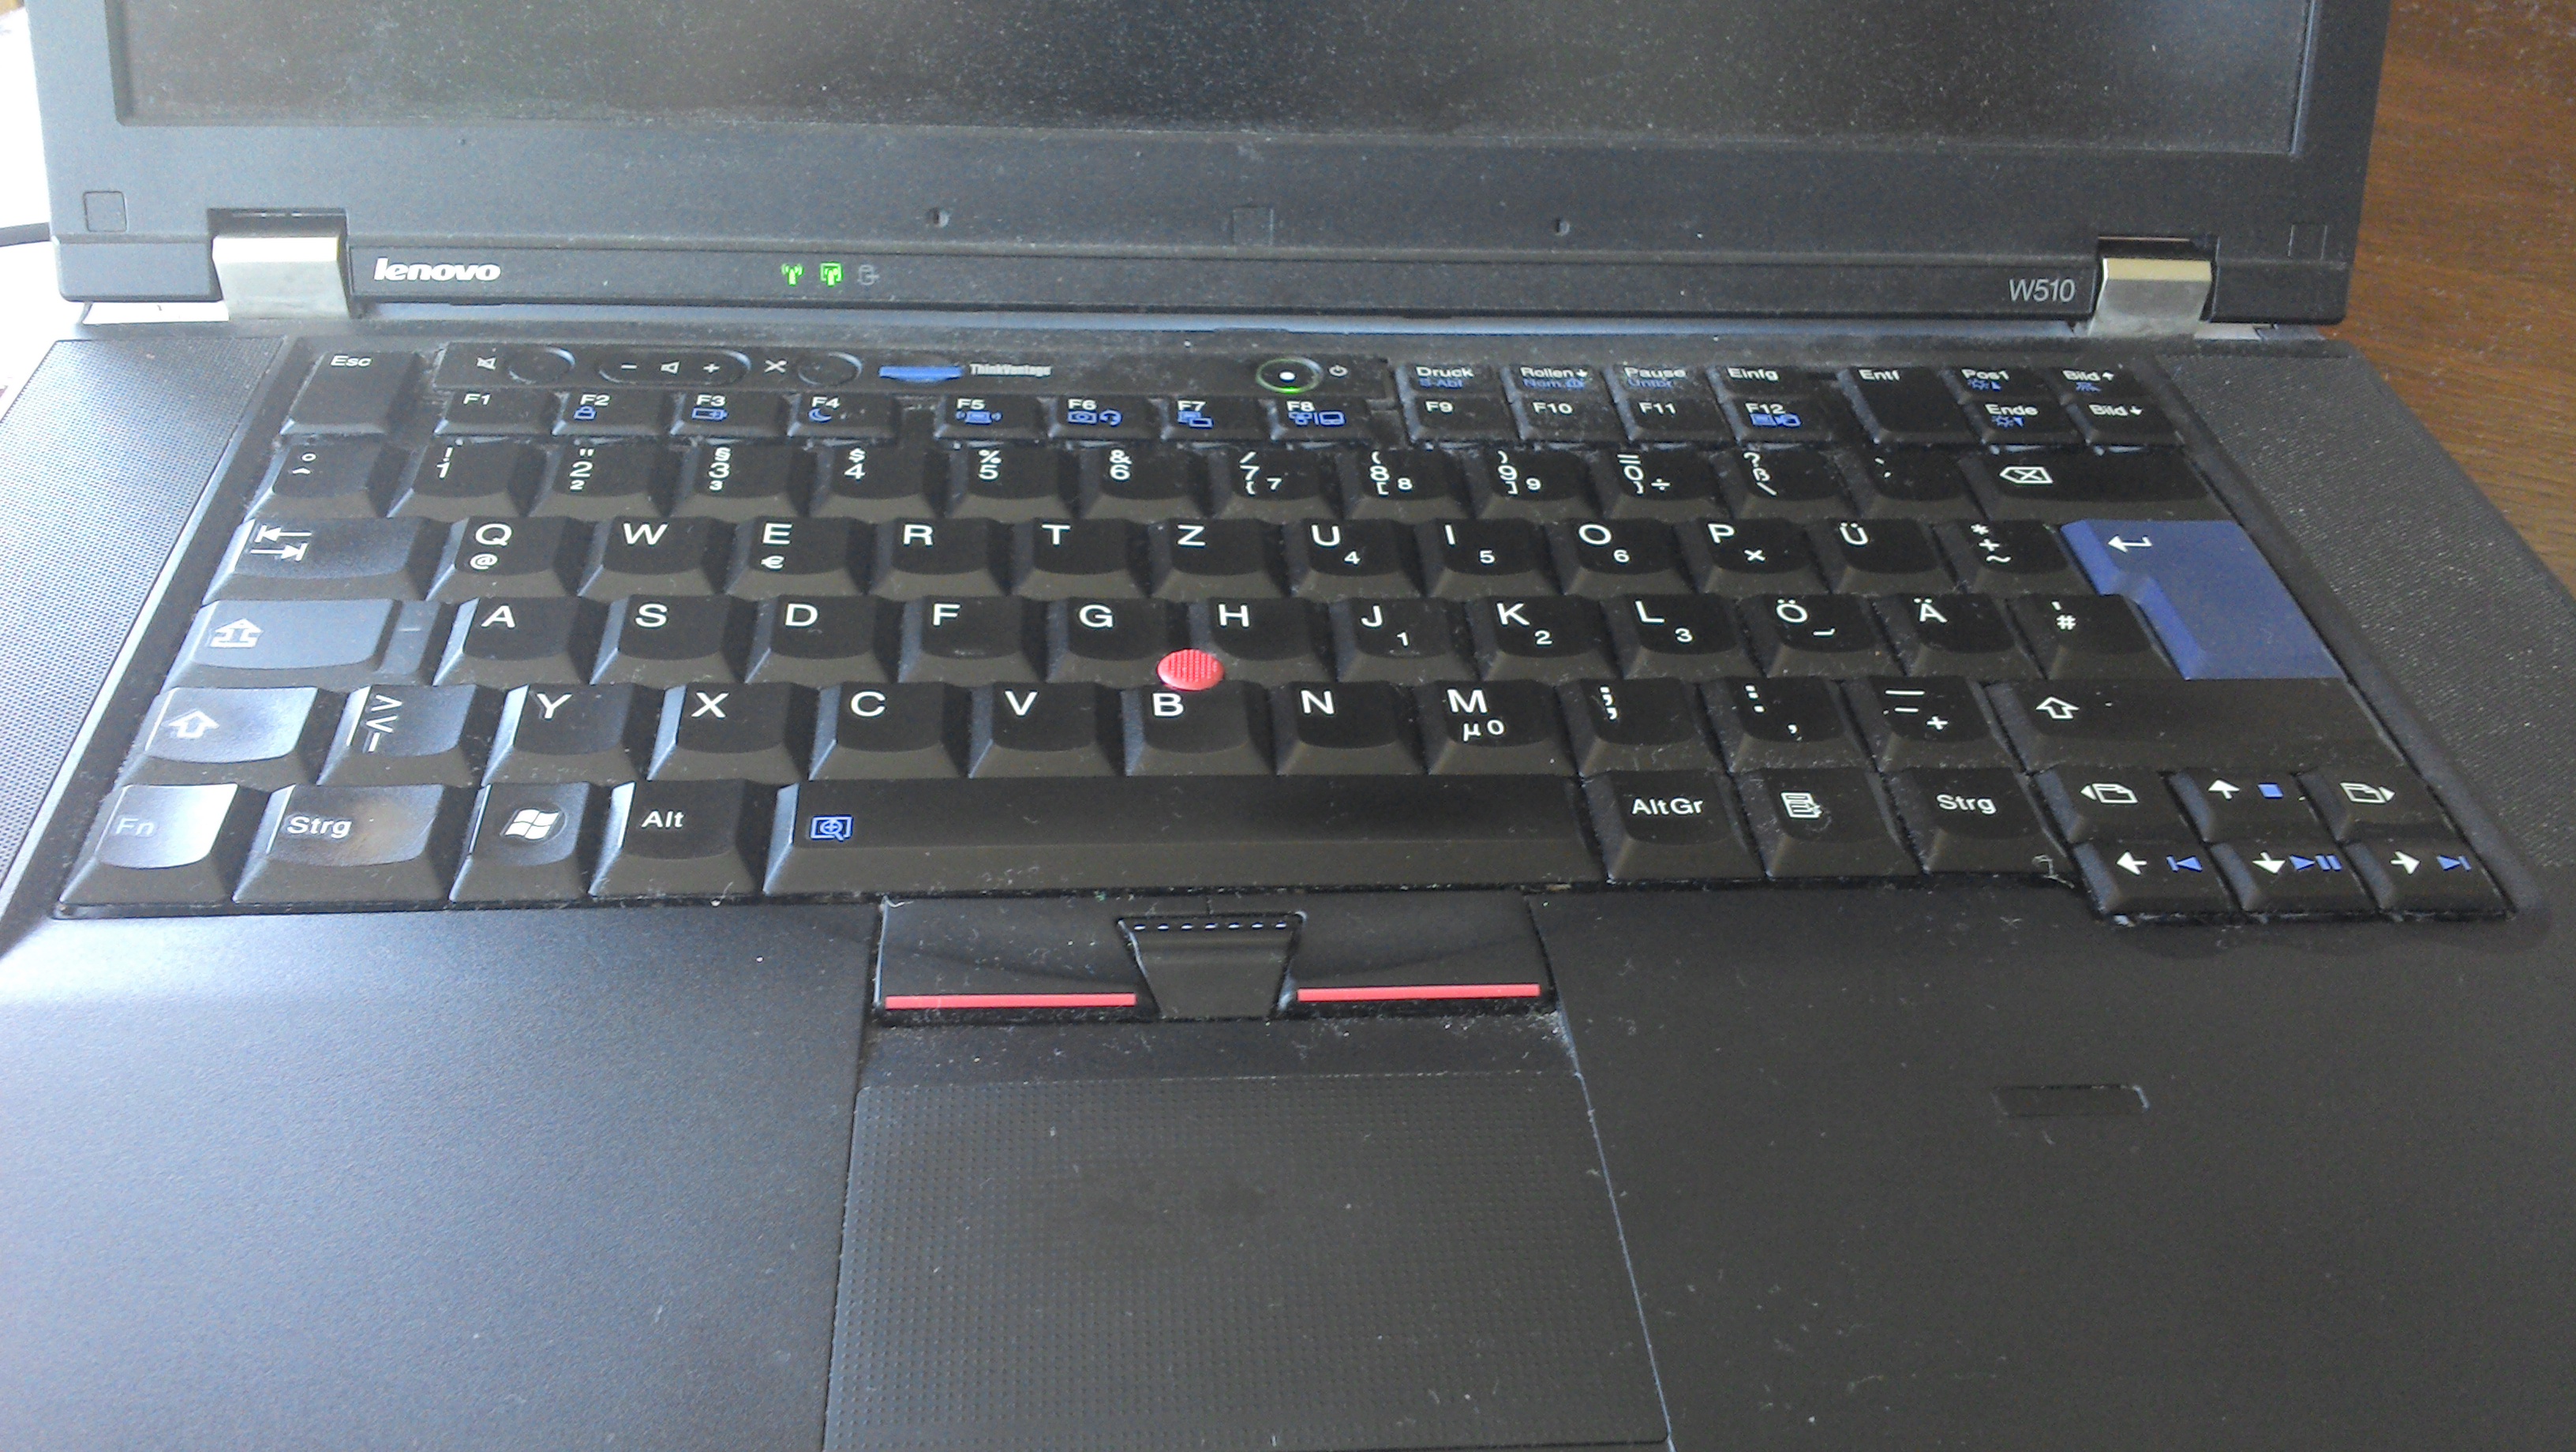 ThinkPad W510 Brightness Keys and Ubuntu 15.04